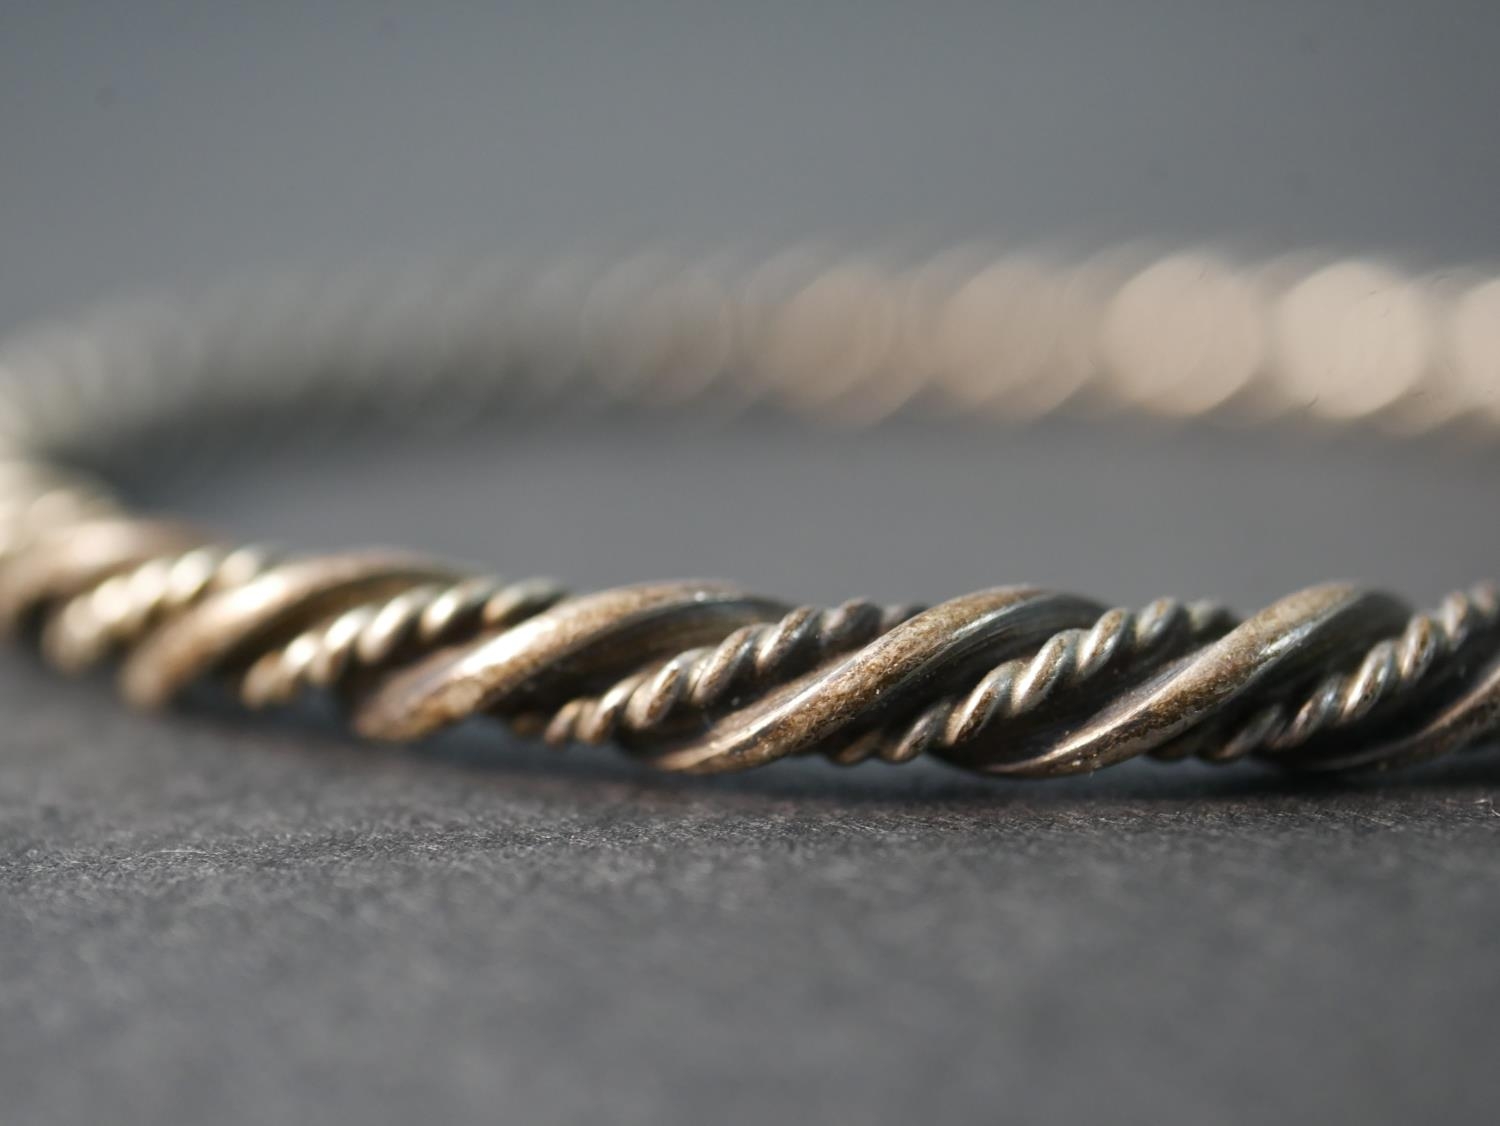 A Georg Jensen silver rope twist bangle, design no. 17B, George Jensen oval mark. - Image 2 of 7